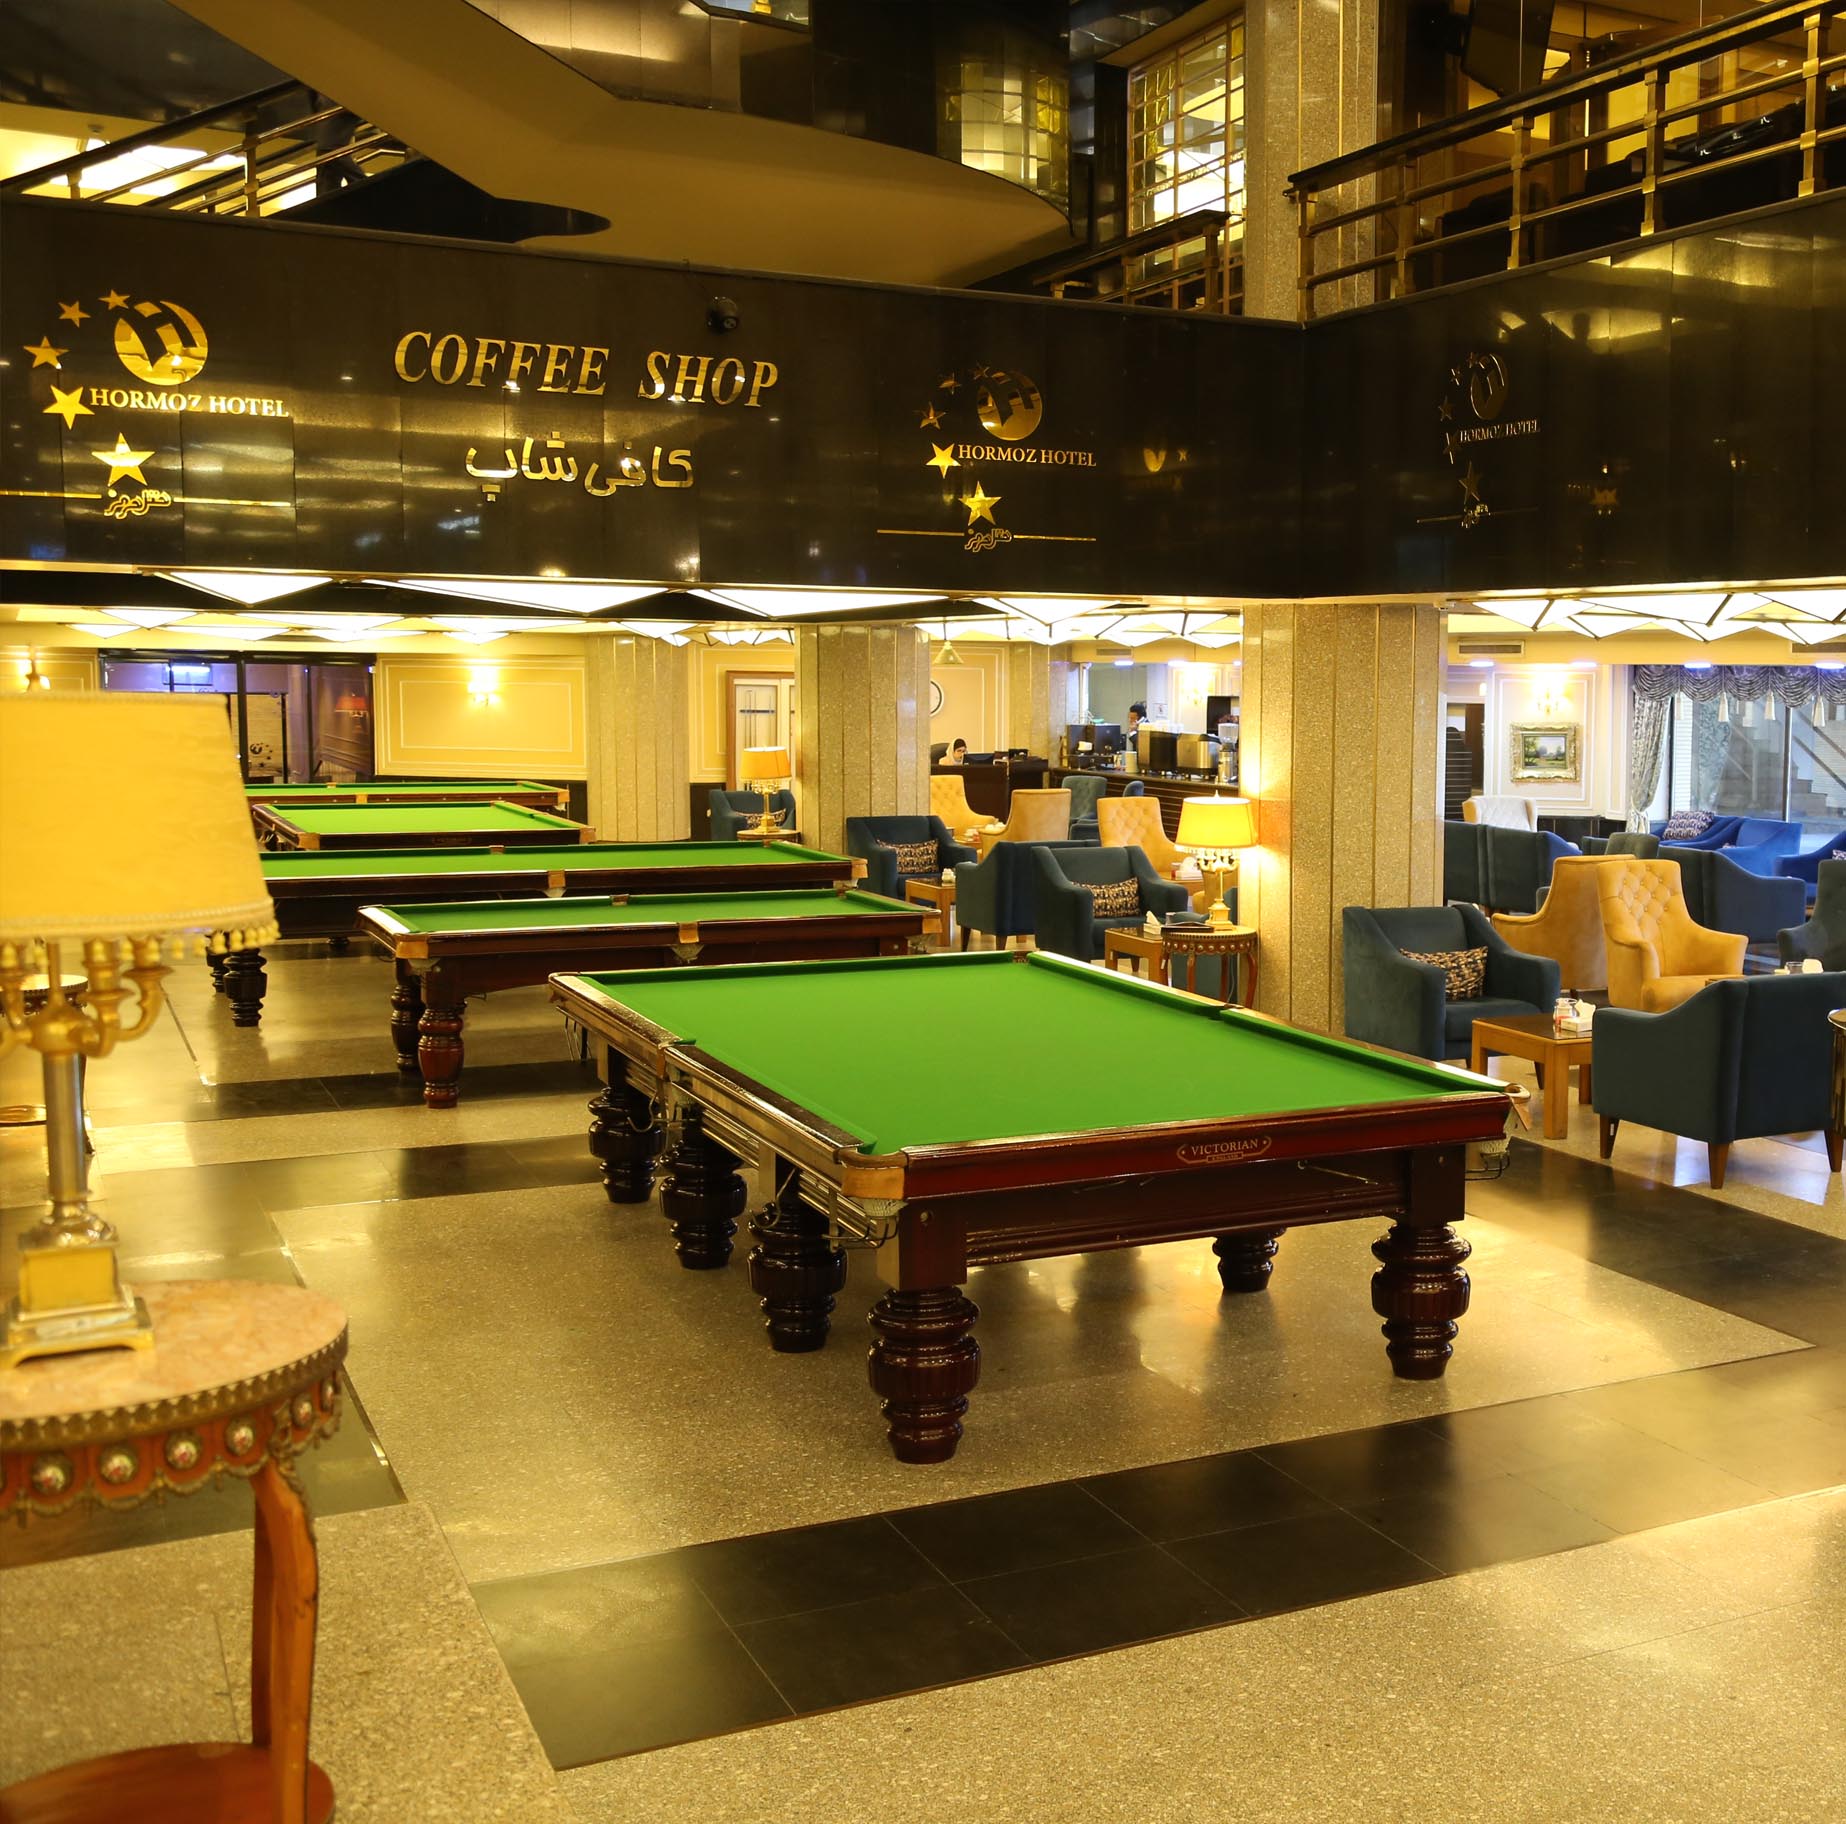 Coffee shop and billiards Hormoz five star hotel in Bandar Abbas